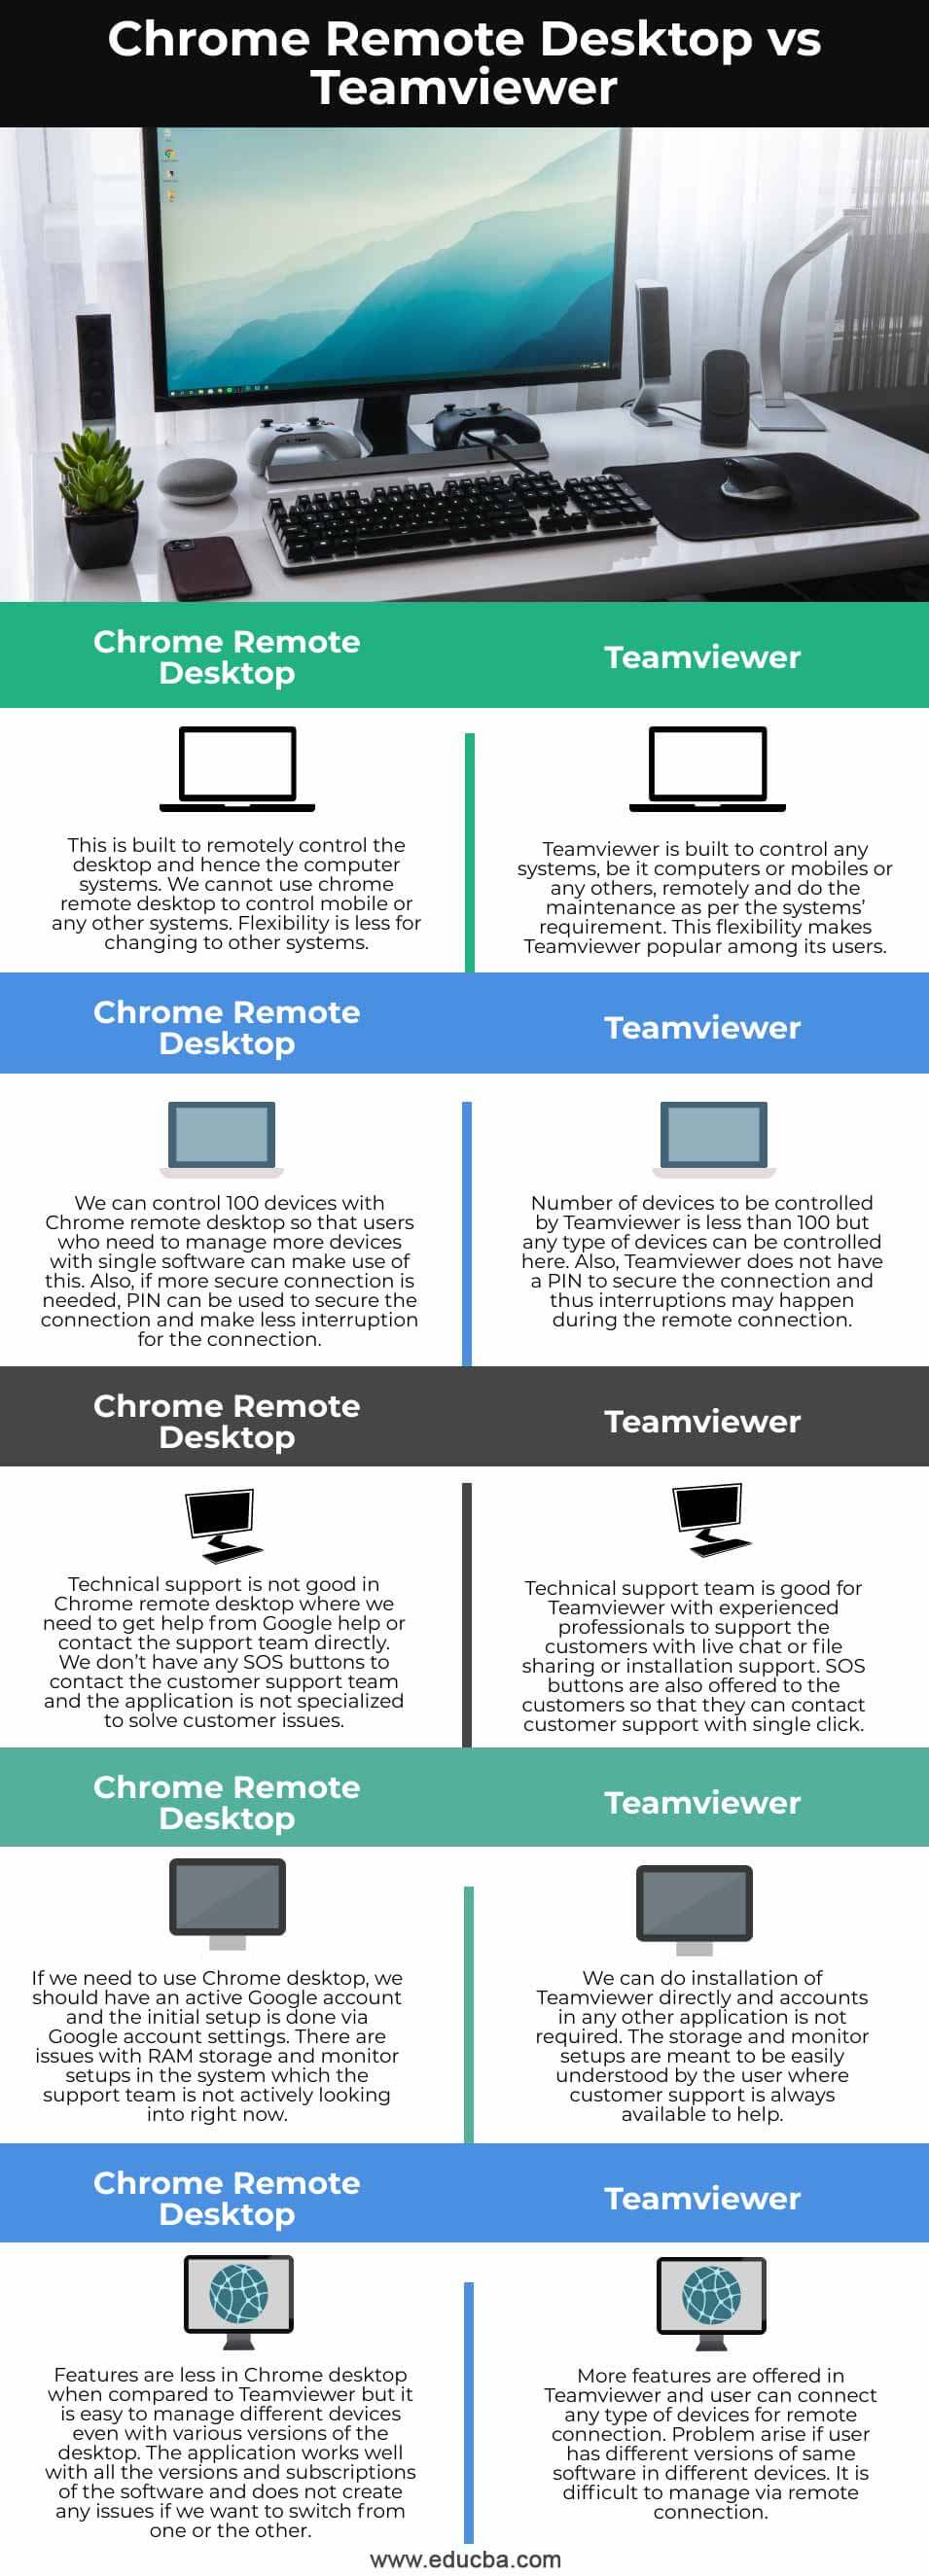 Chrome-Remote-Desktop-vs-Teamviewer-info